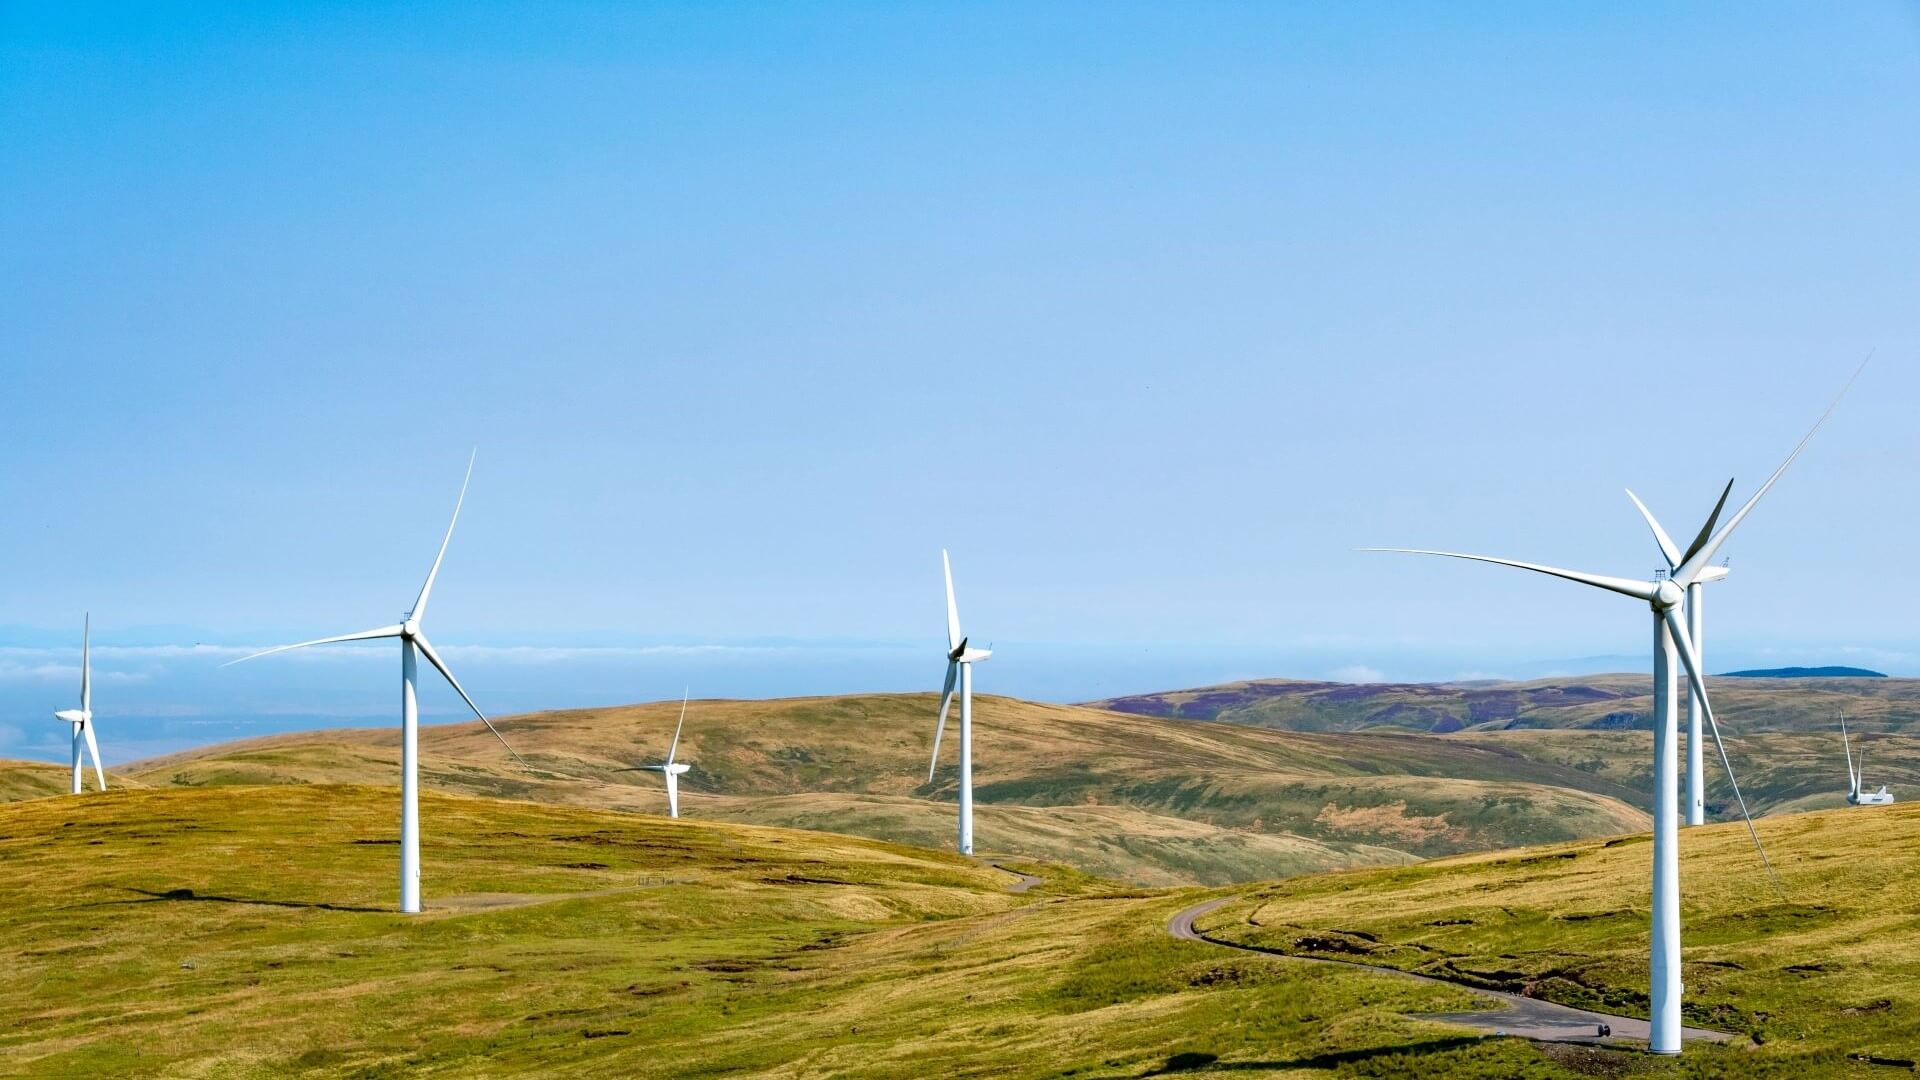 Series of wind turbines in Scottish hills, set against blue sky